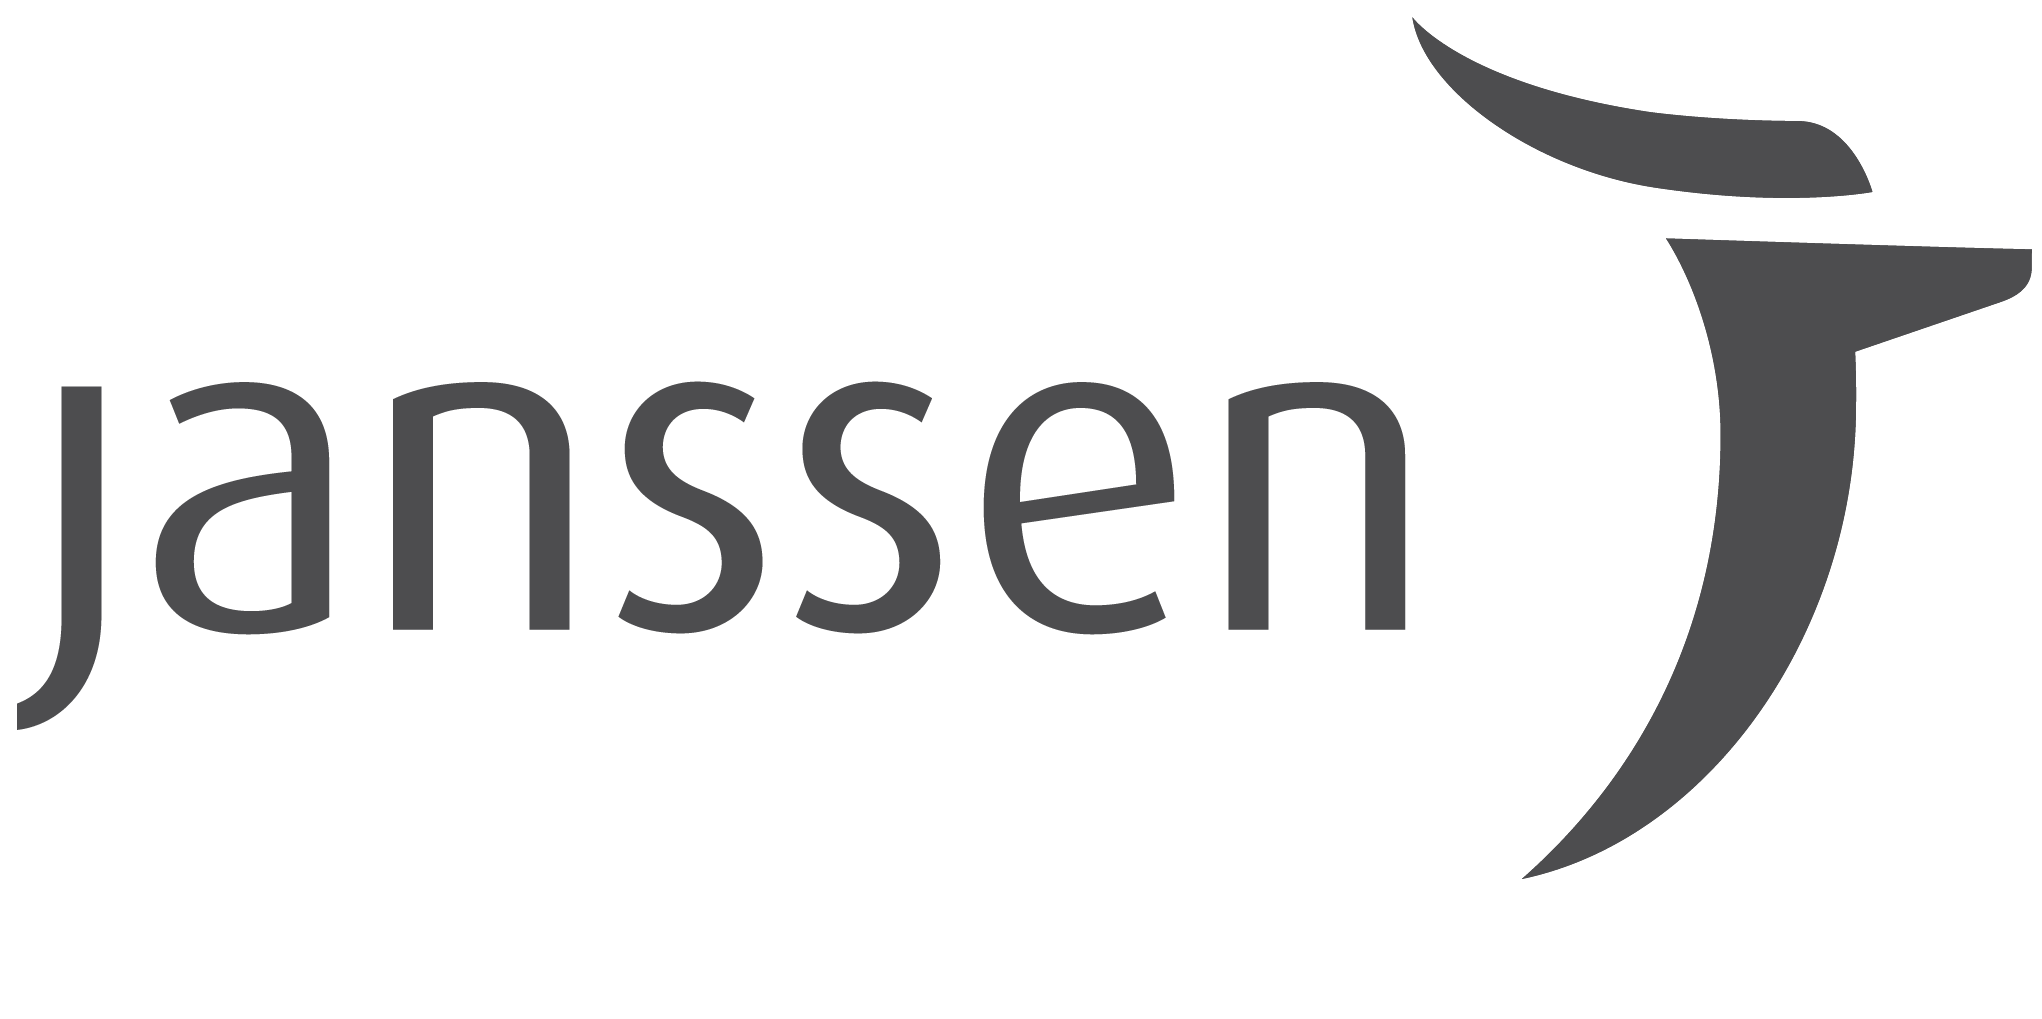 Janssen Pharmaceuticals